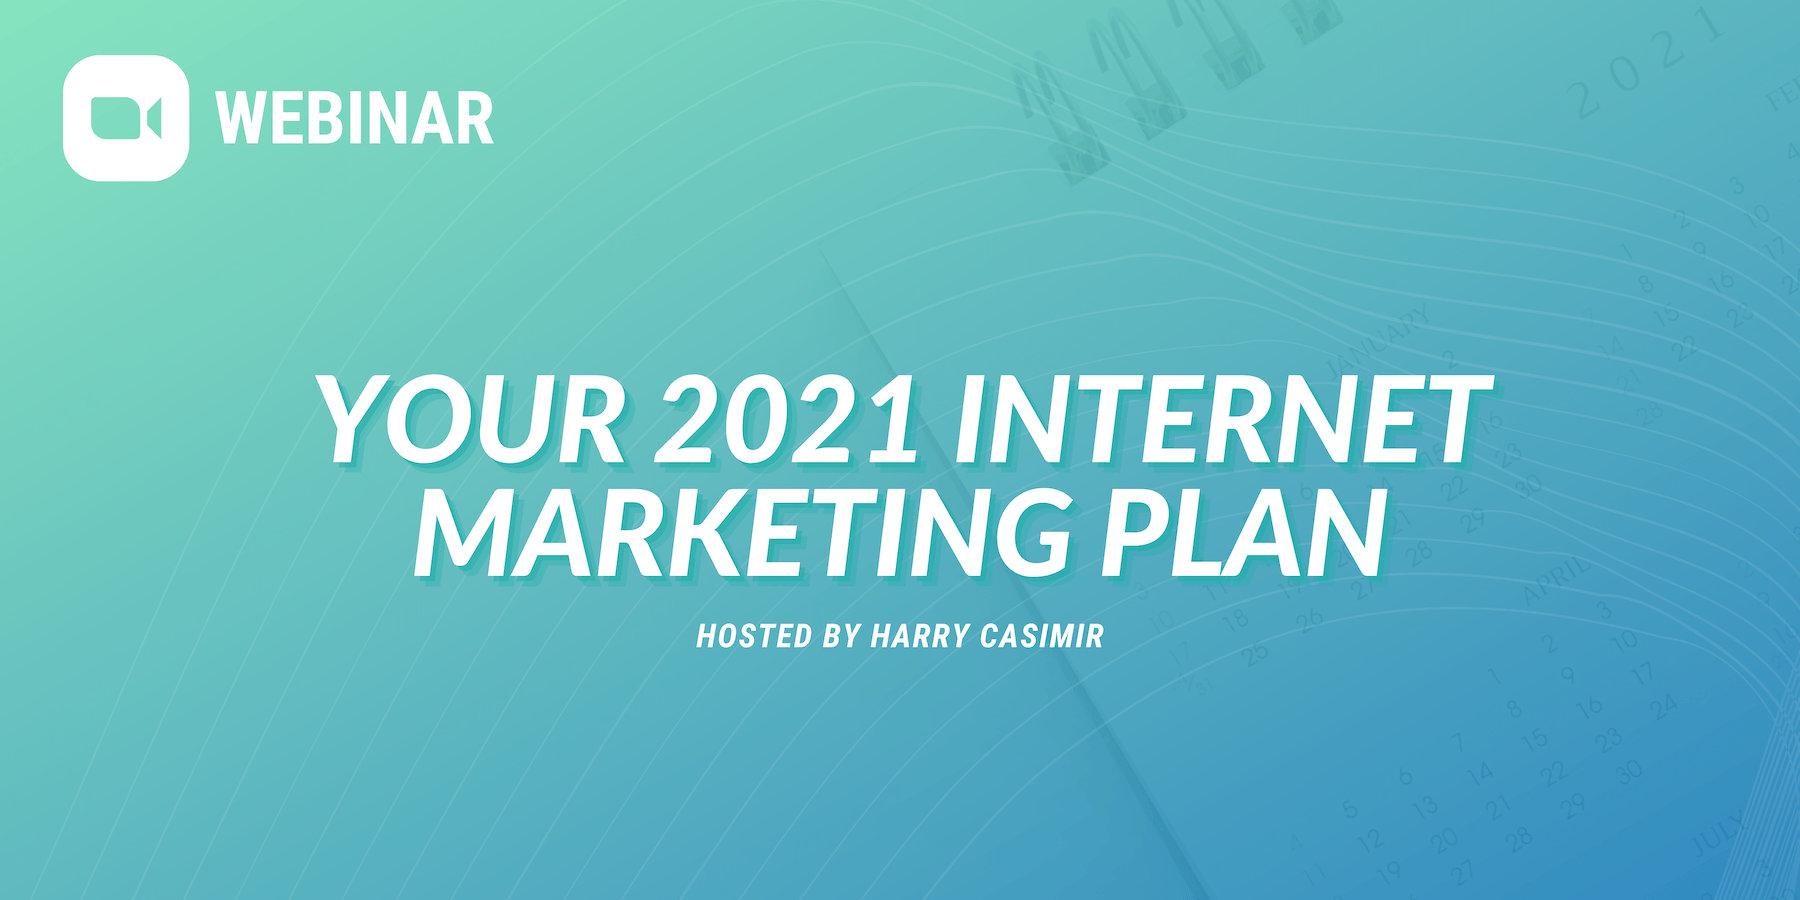 Webinar: Your 2021 Internet Marketing Plan, hosted by Harry Casimir